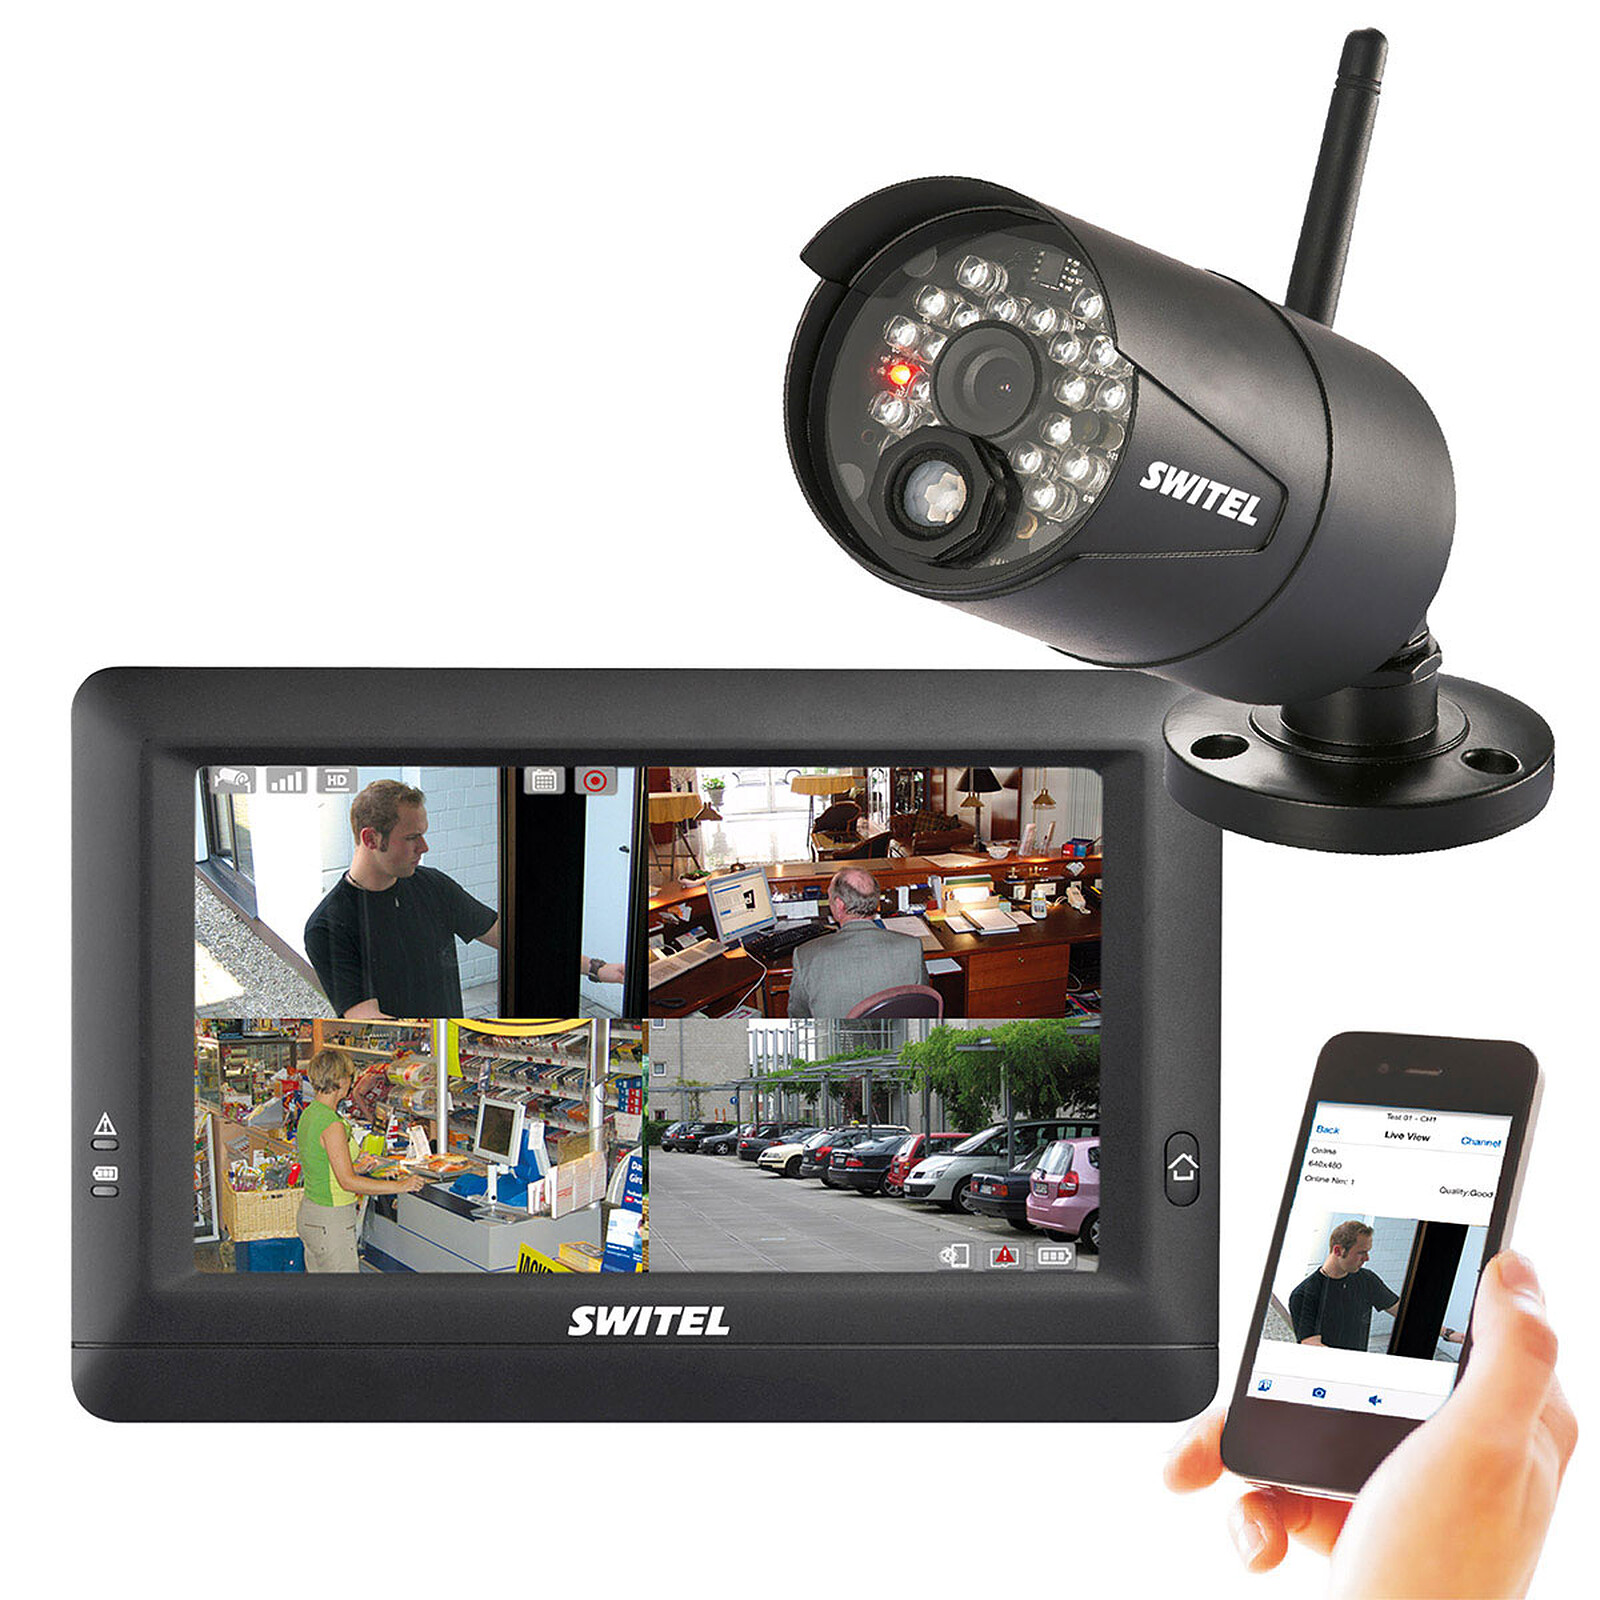 Switel HSIP5000 - Caméra IP - Garantie 3 ans LDLC